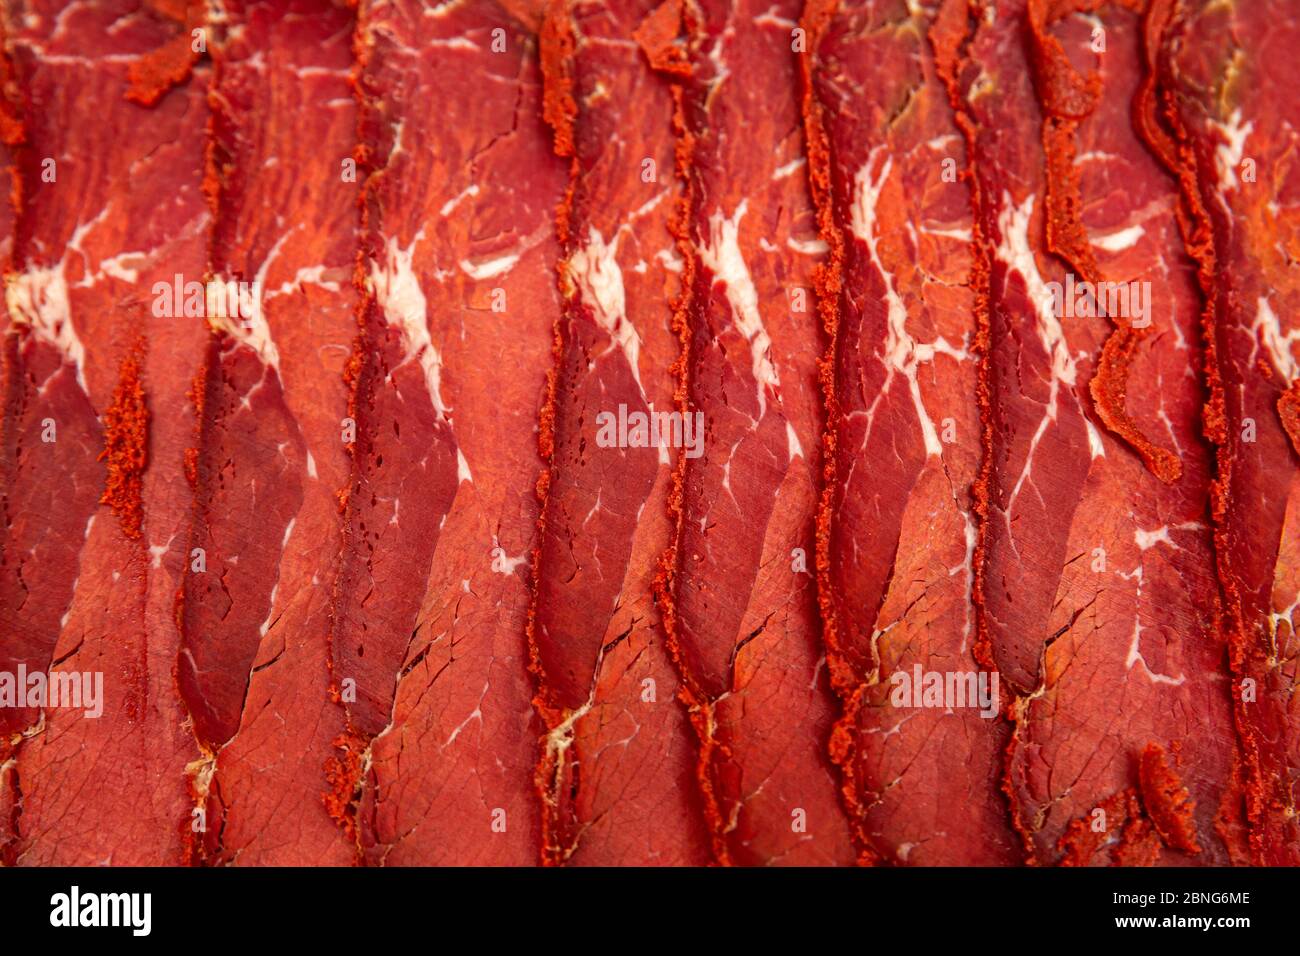 Turkish bacon, pastrami ( kayseri pastirma ) Stock Photo